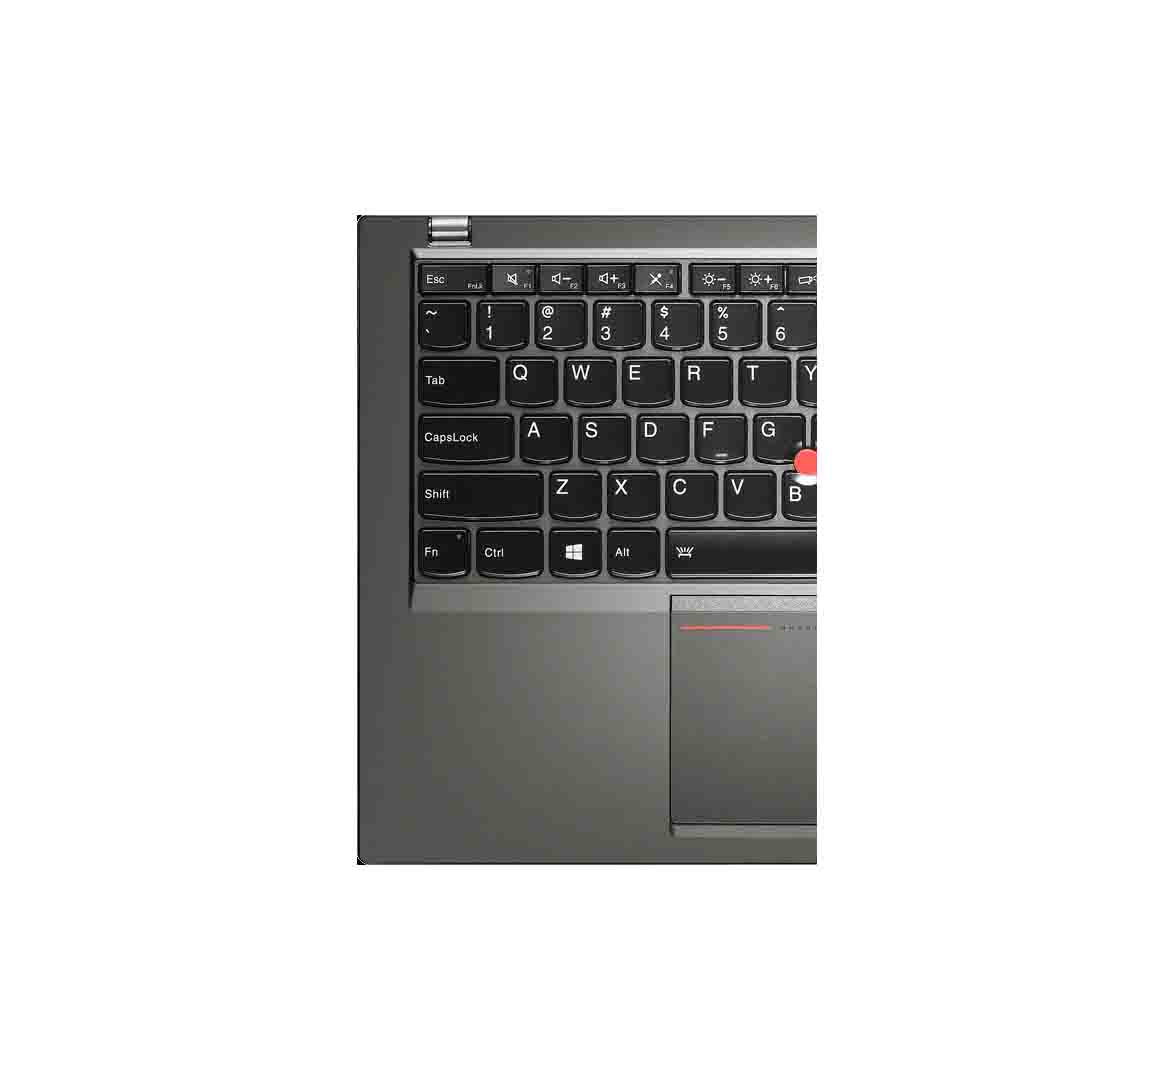 Lenovo ThinkPad X240 Business Laptop, Intel Core i7-4th Gen. CPU, 8GB RAM, 256GB SSD, 12.5 inch Display, Windows 10 Pro